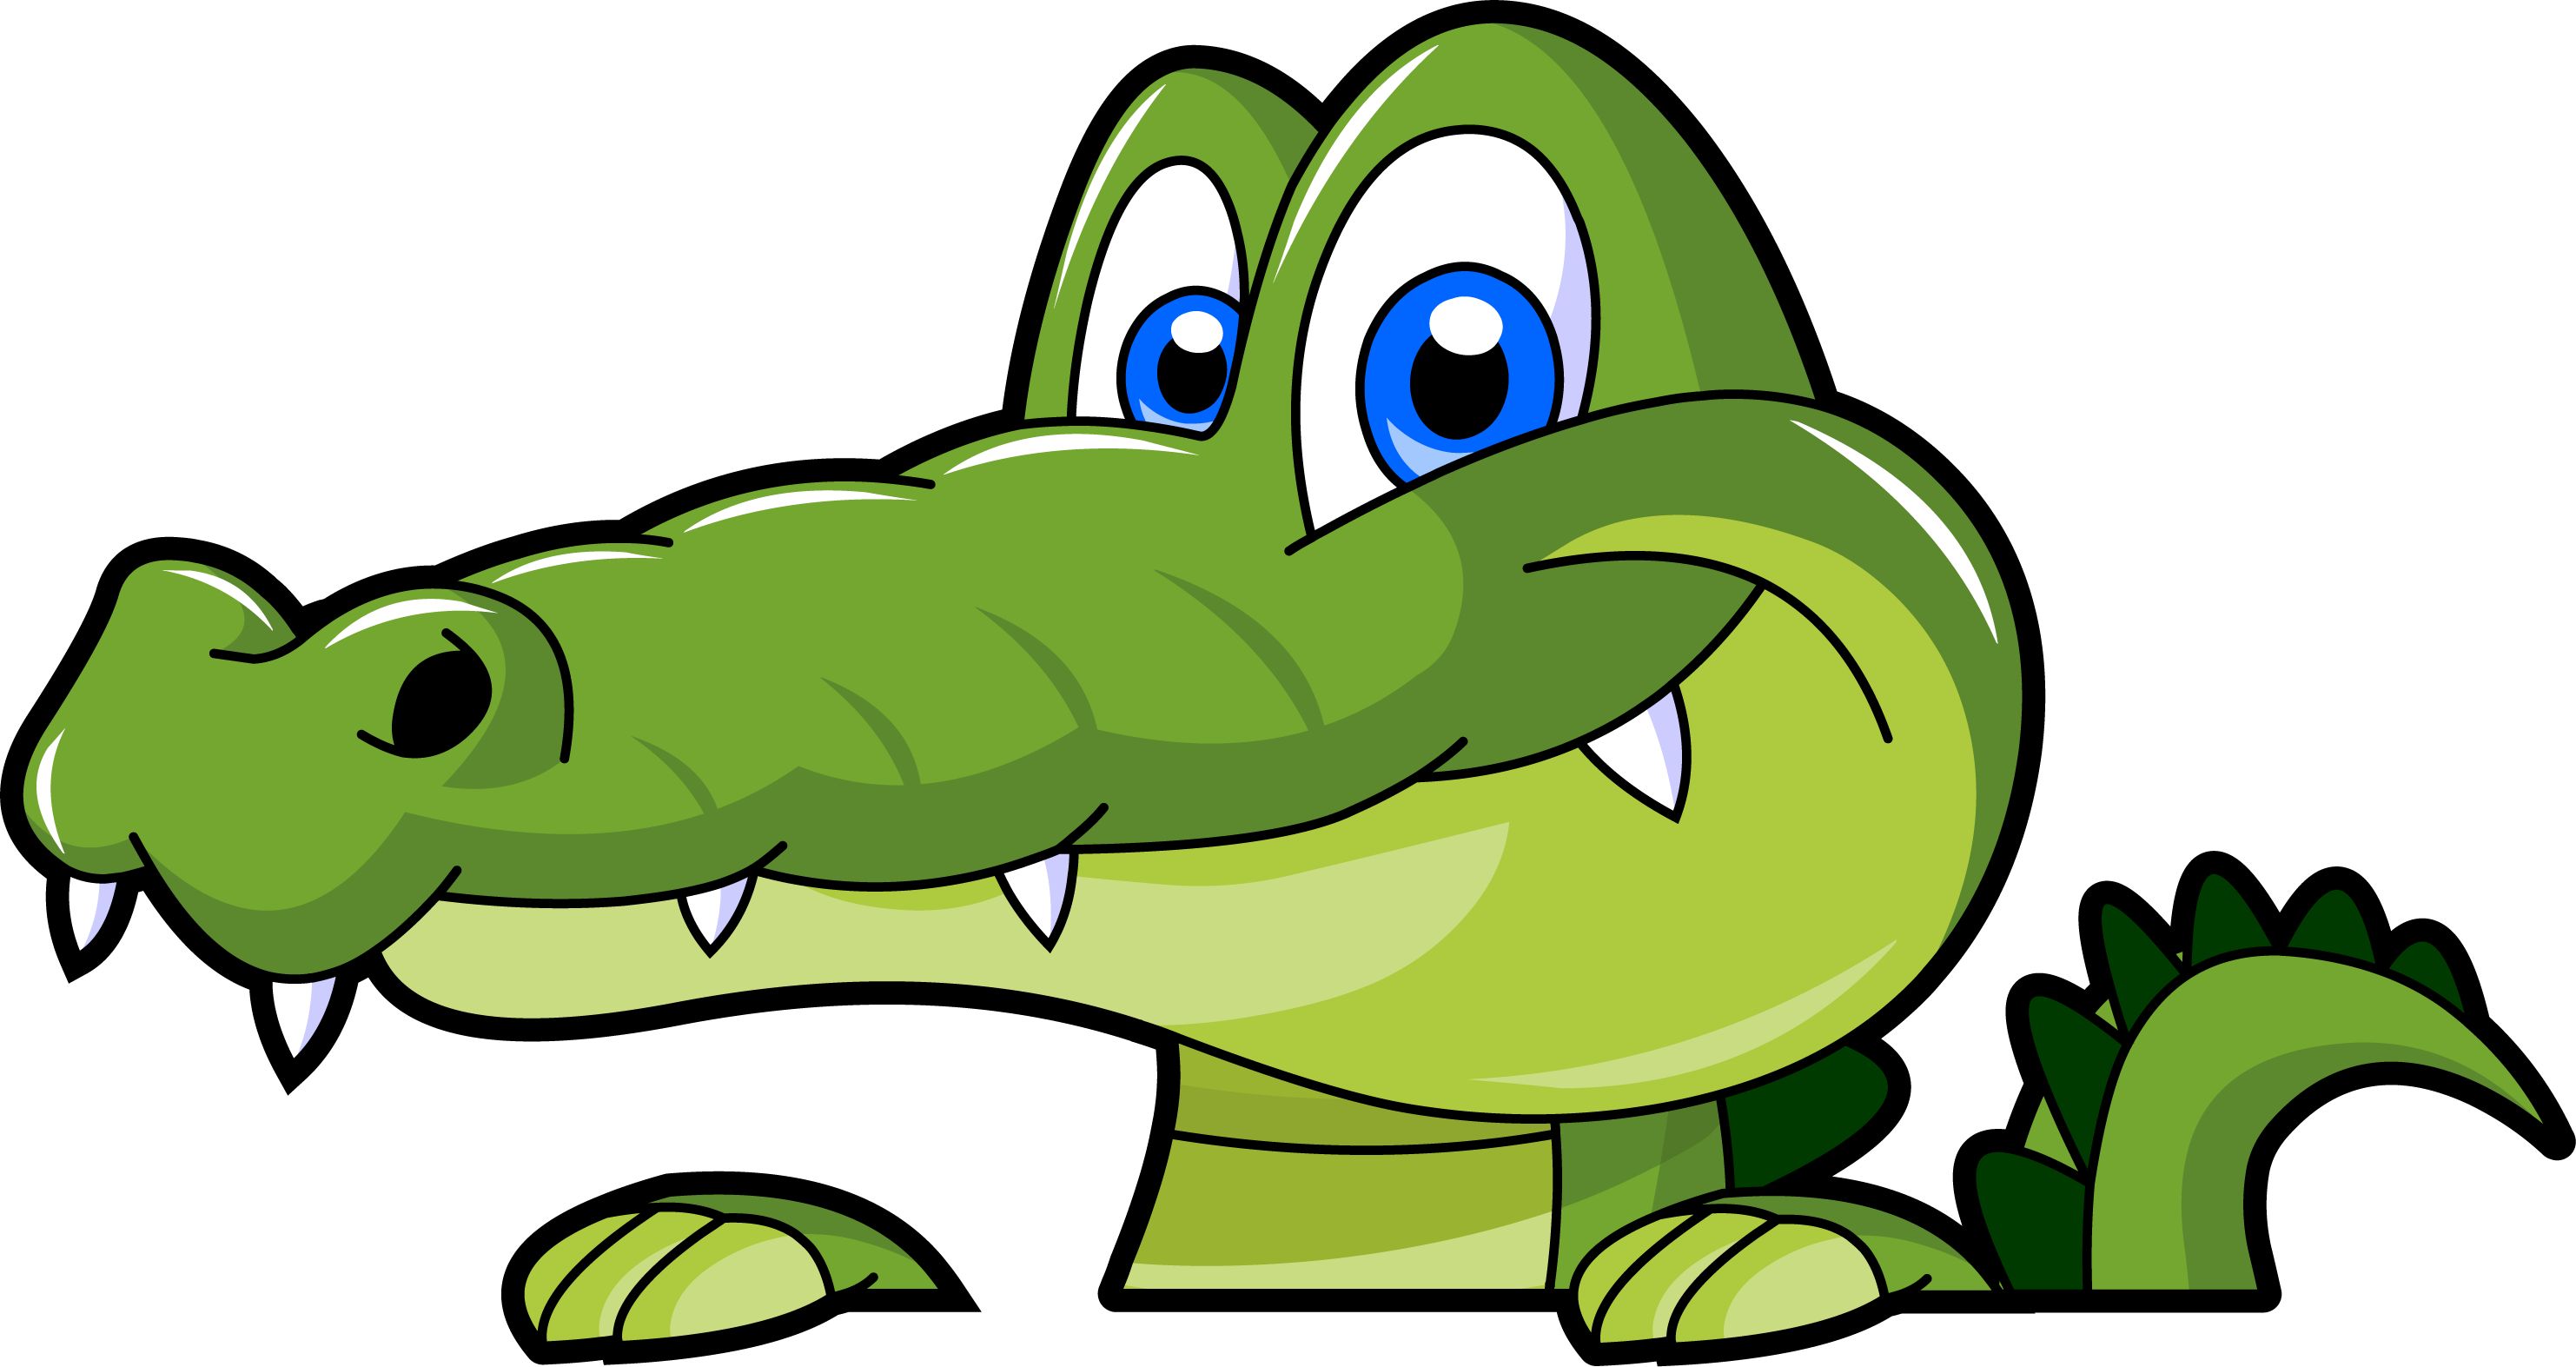 Swamp alligator cartoon clipart